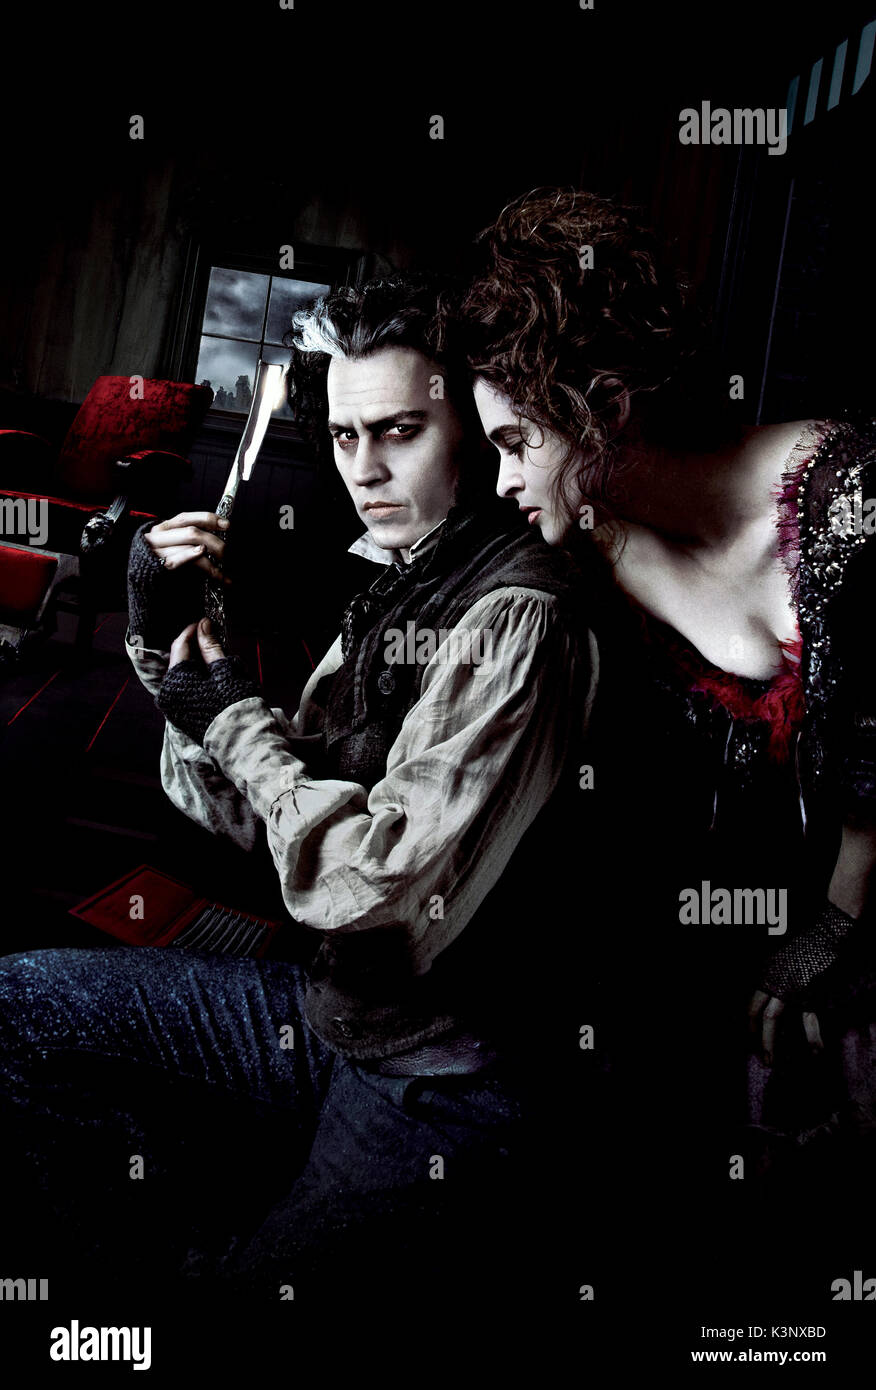 SWEENEY TOODA: Il barbiere demonio di Fleet Street [US 2007] Johnny Depp, Helena Bonham Carter data: 2007 Foto Stock